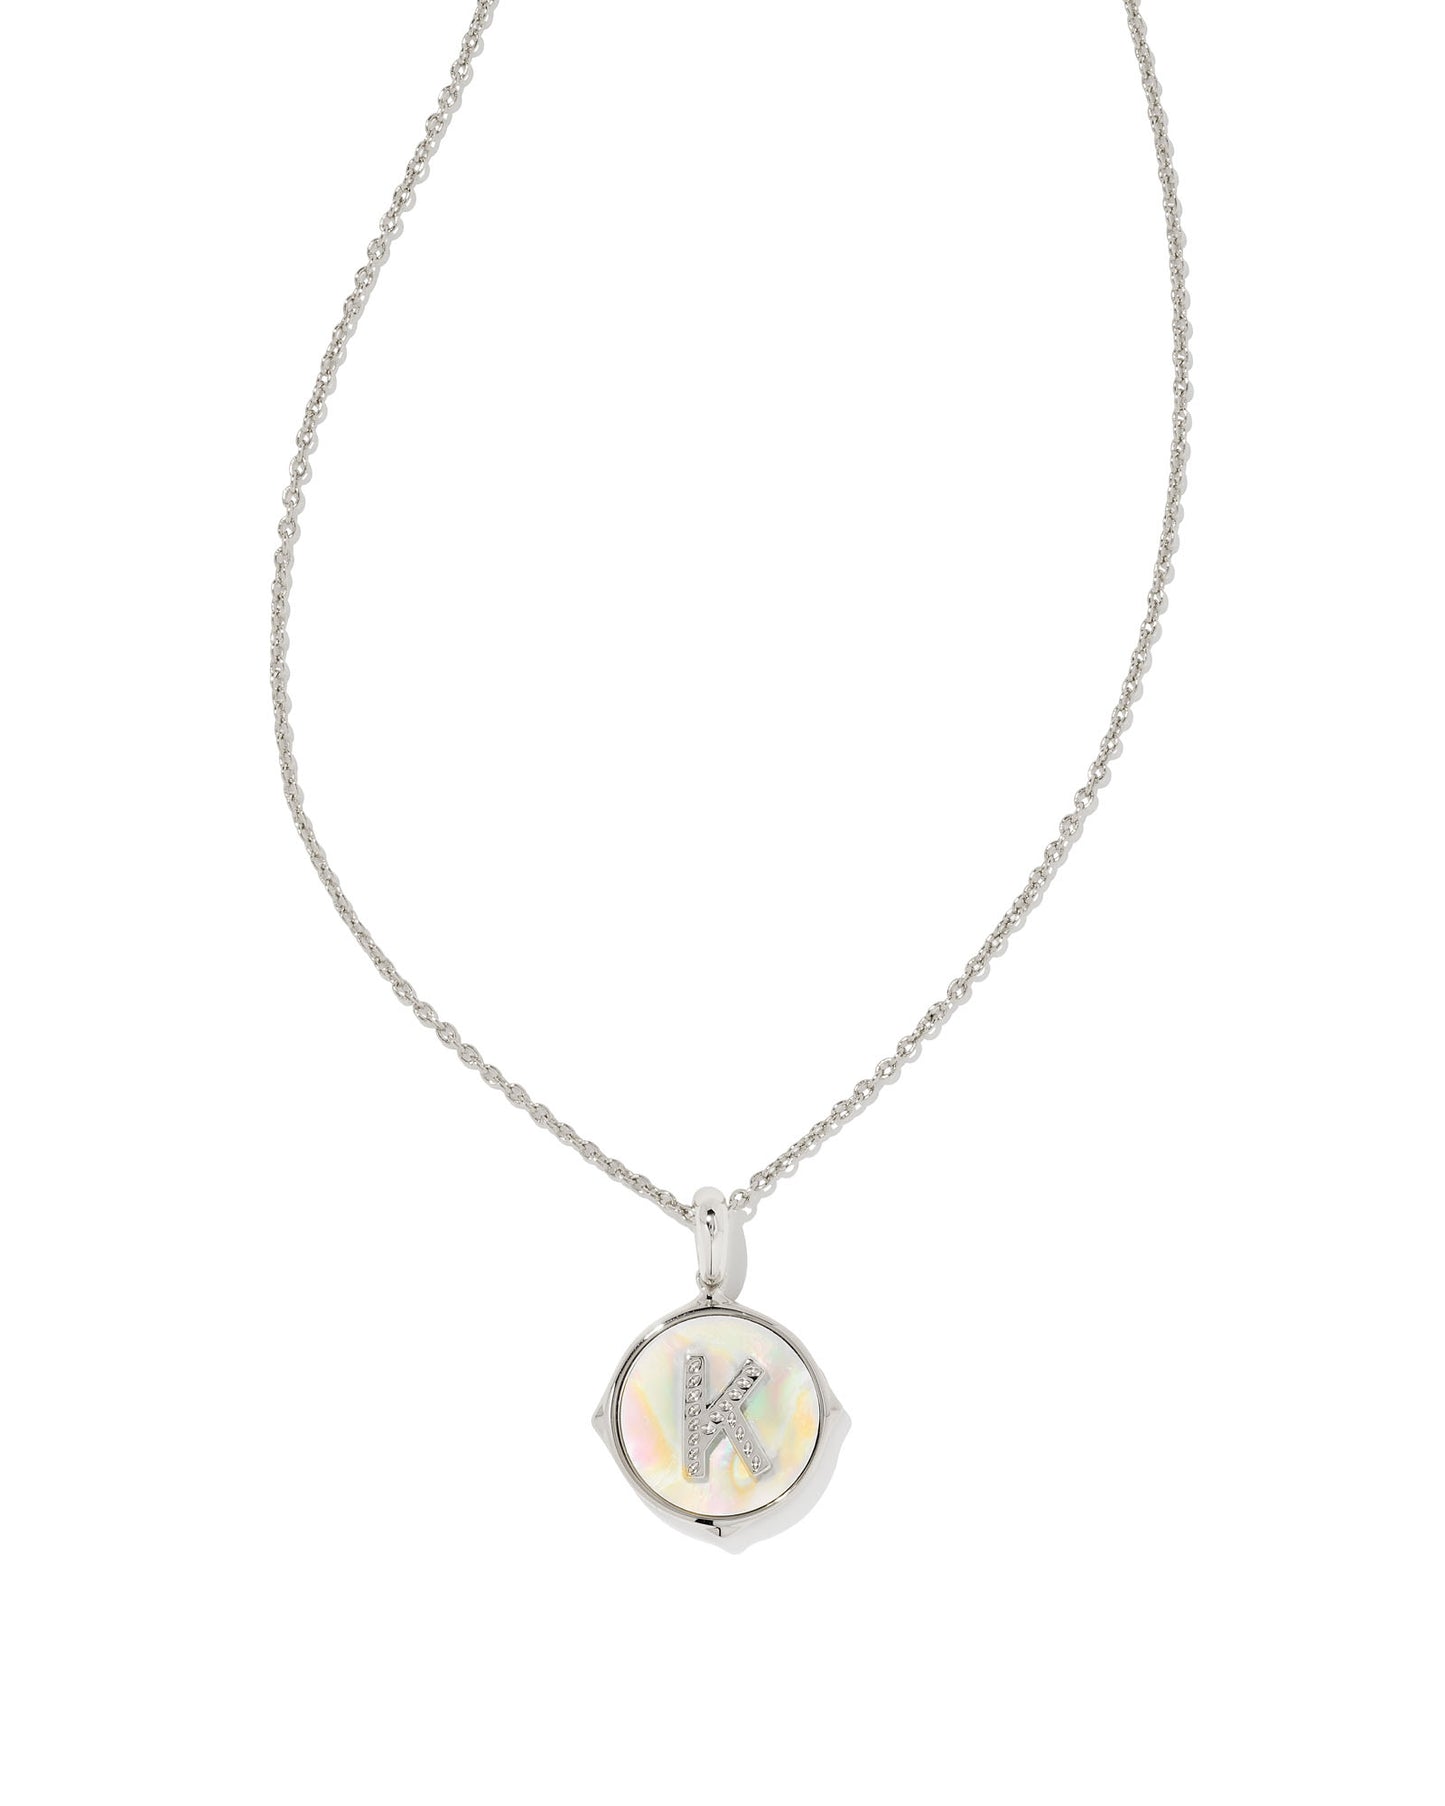 KENDRA SCOTT: Letter Disc Pendant Necklace in Rhodium/Iridescent Abalone